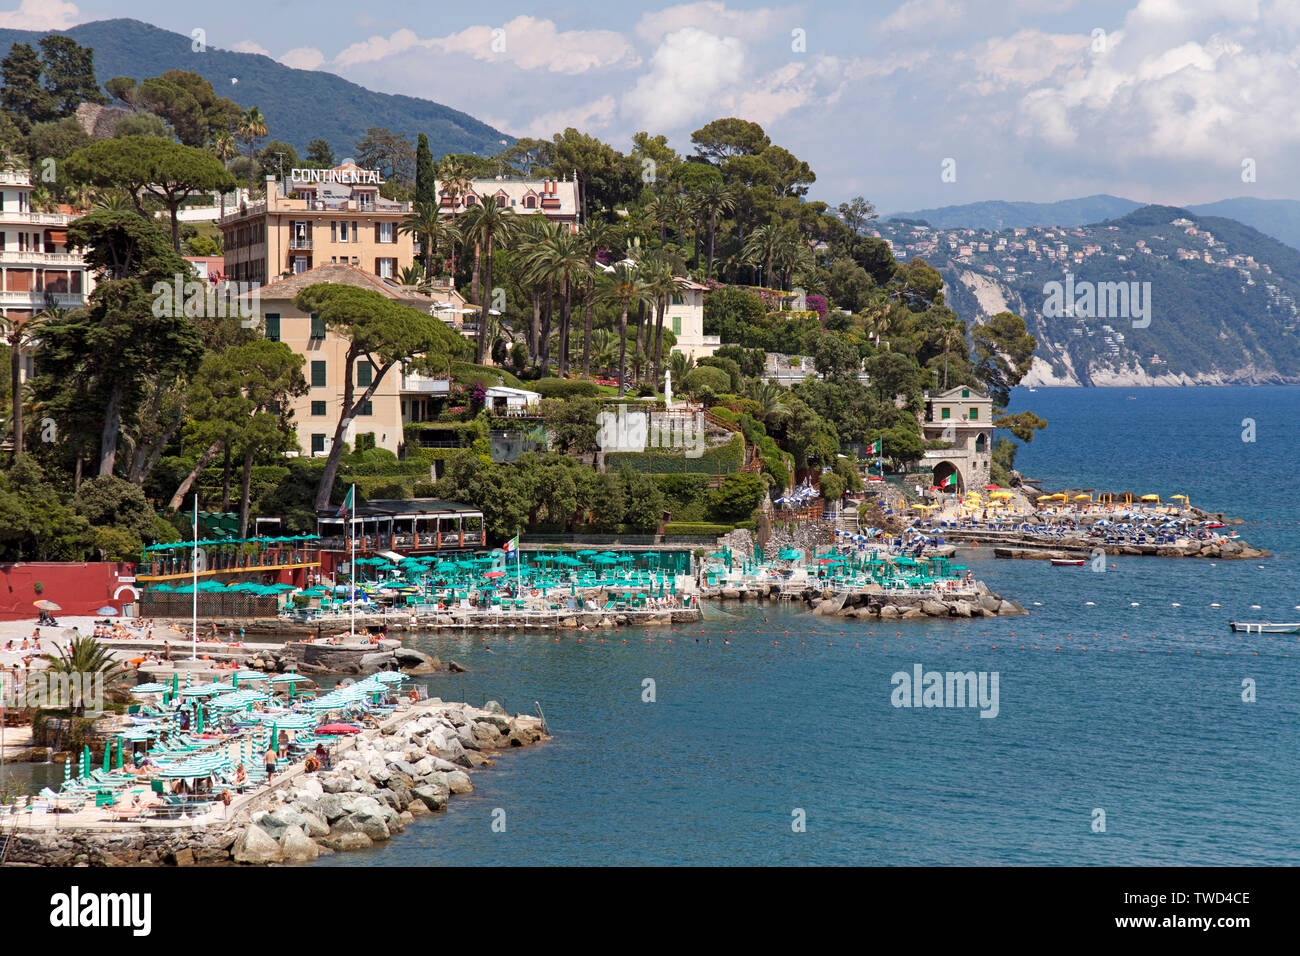 Mediterranean seafront of Santa Margherita Ligure, a comune in the metropolitan city of Genoa in the Italian region Liguria. Stock Photo